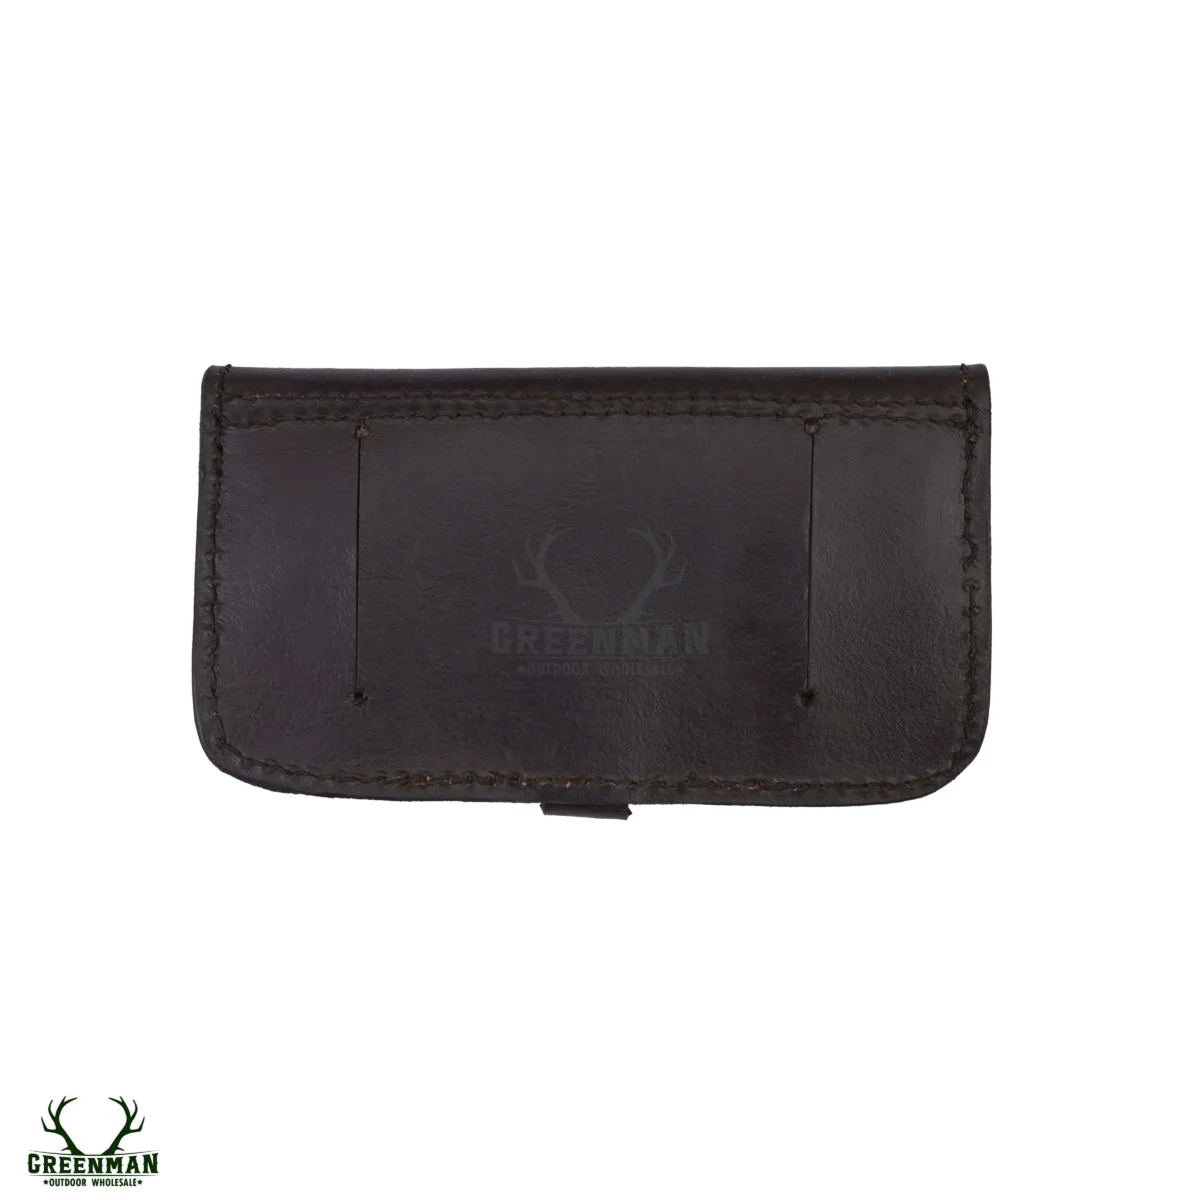 leather cartridge, leather cartridge holder, leather cartridge belt, leather cartridge belt holder